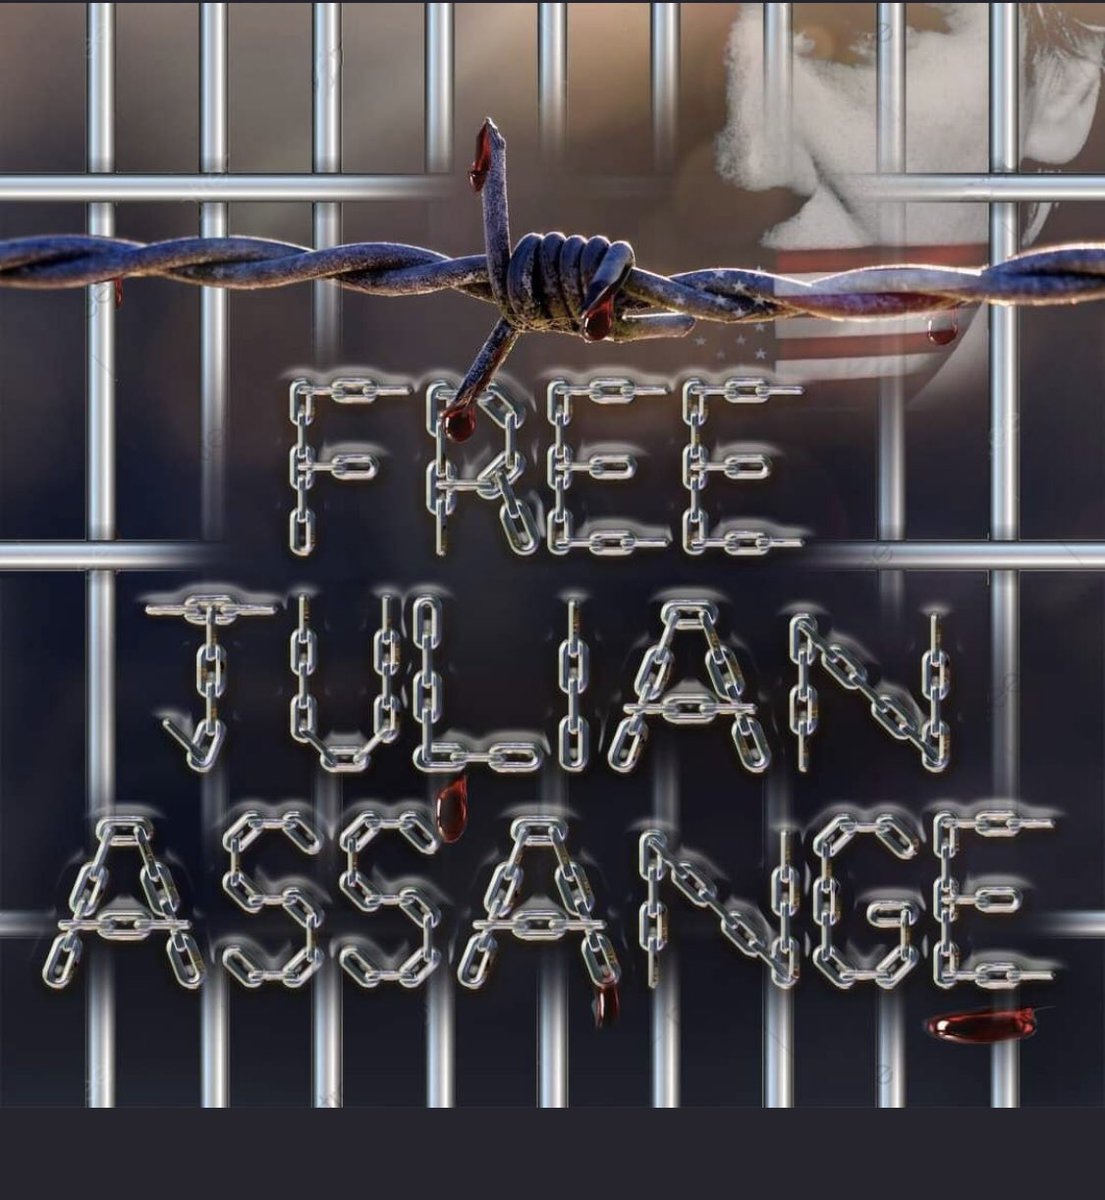 #FreeJulianAssange #DontExtraditeAssange #FREEJULIANASSANGENOW #JournalismIsNotACrime